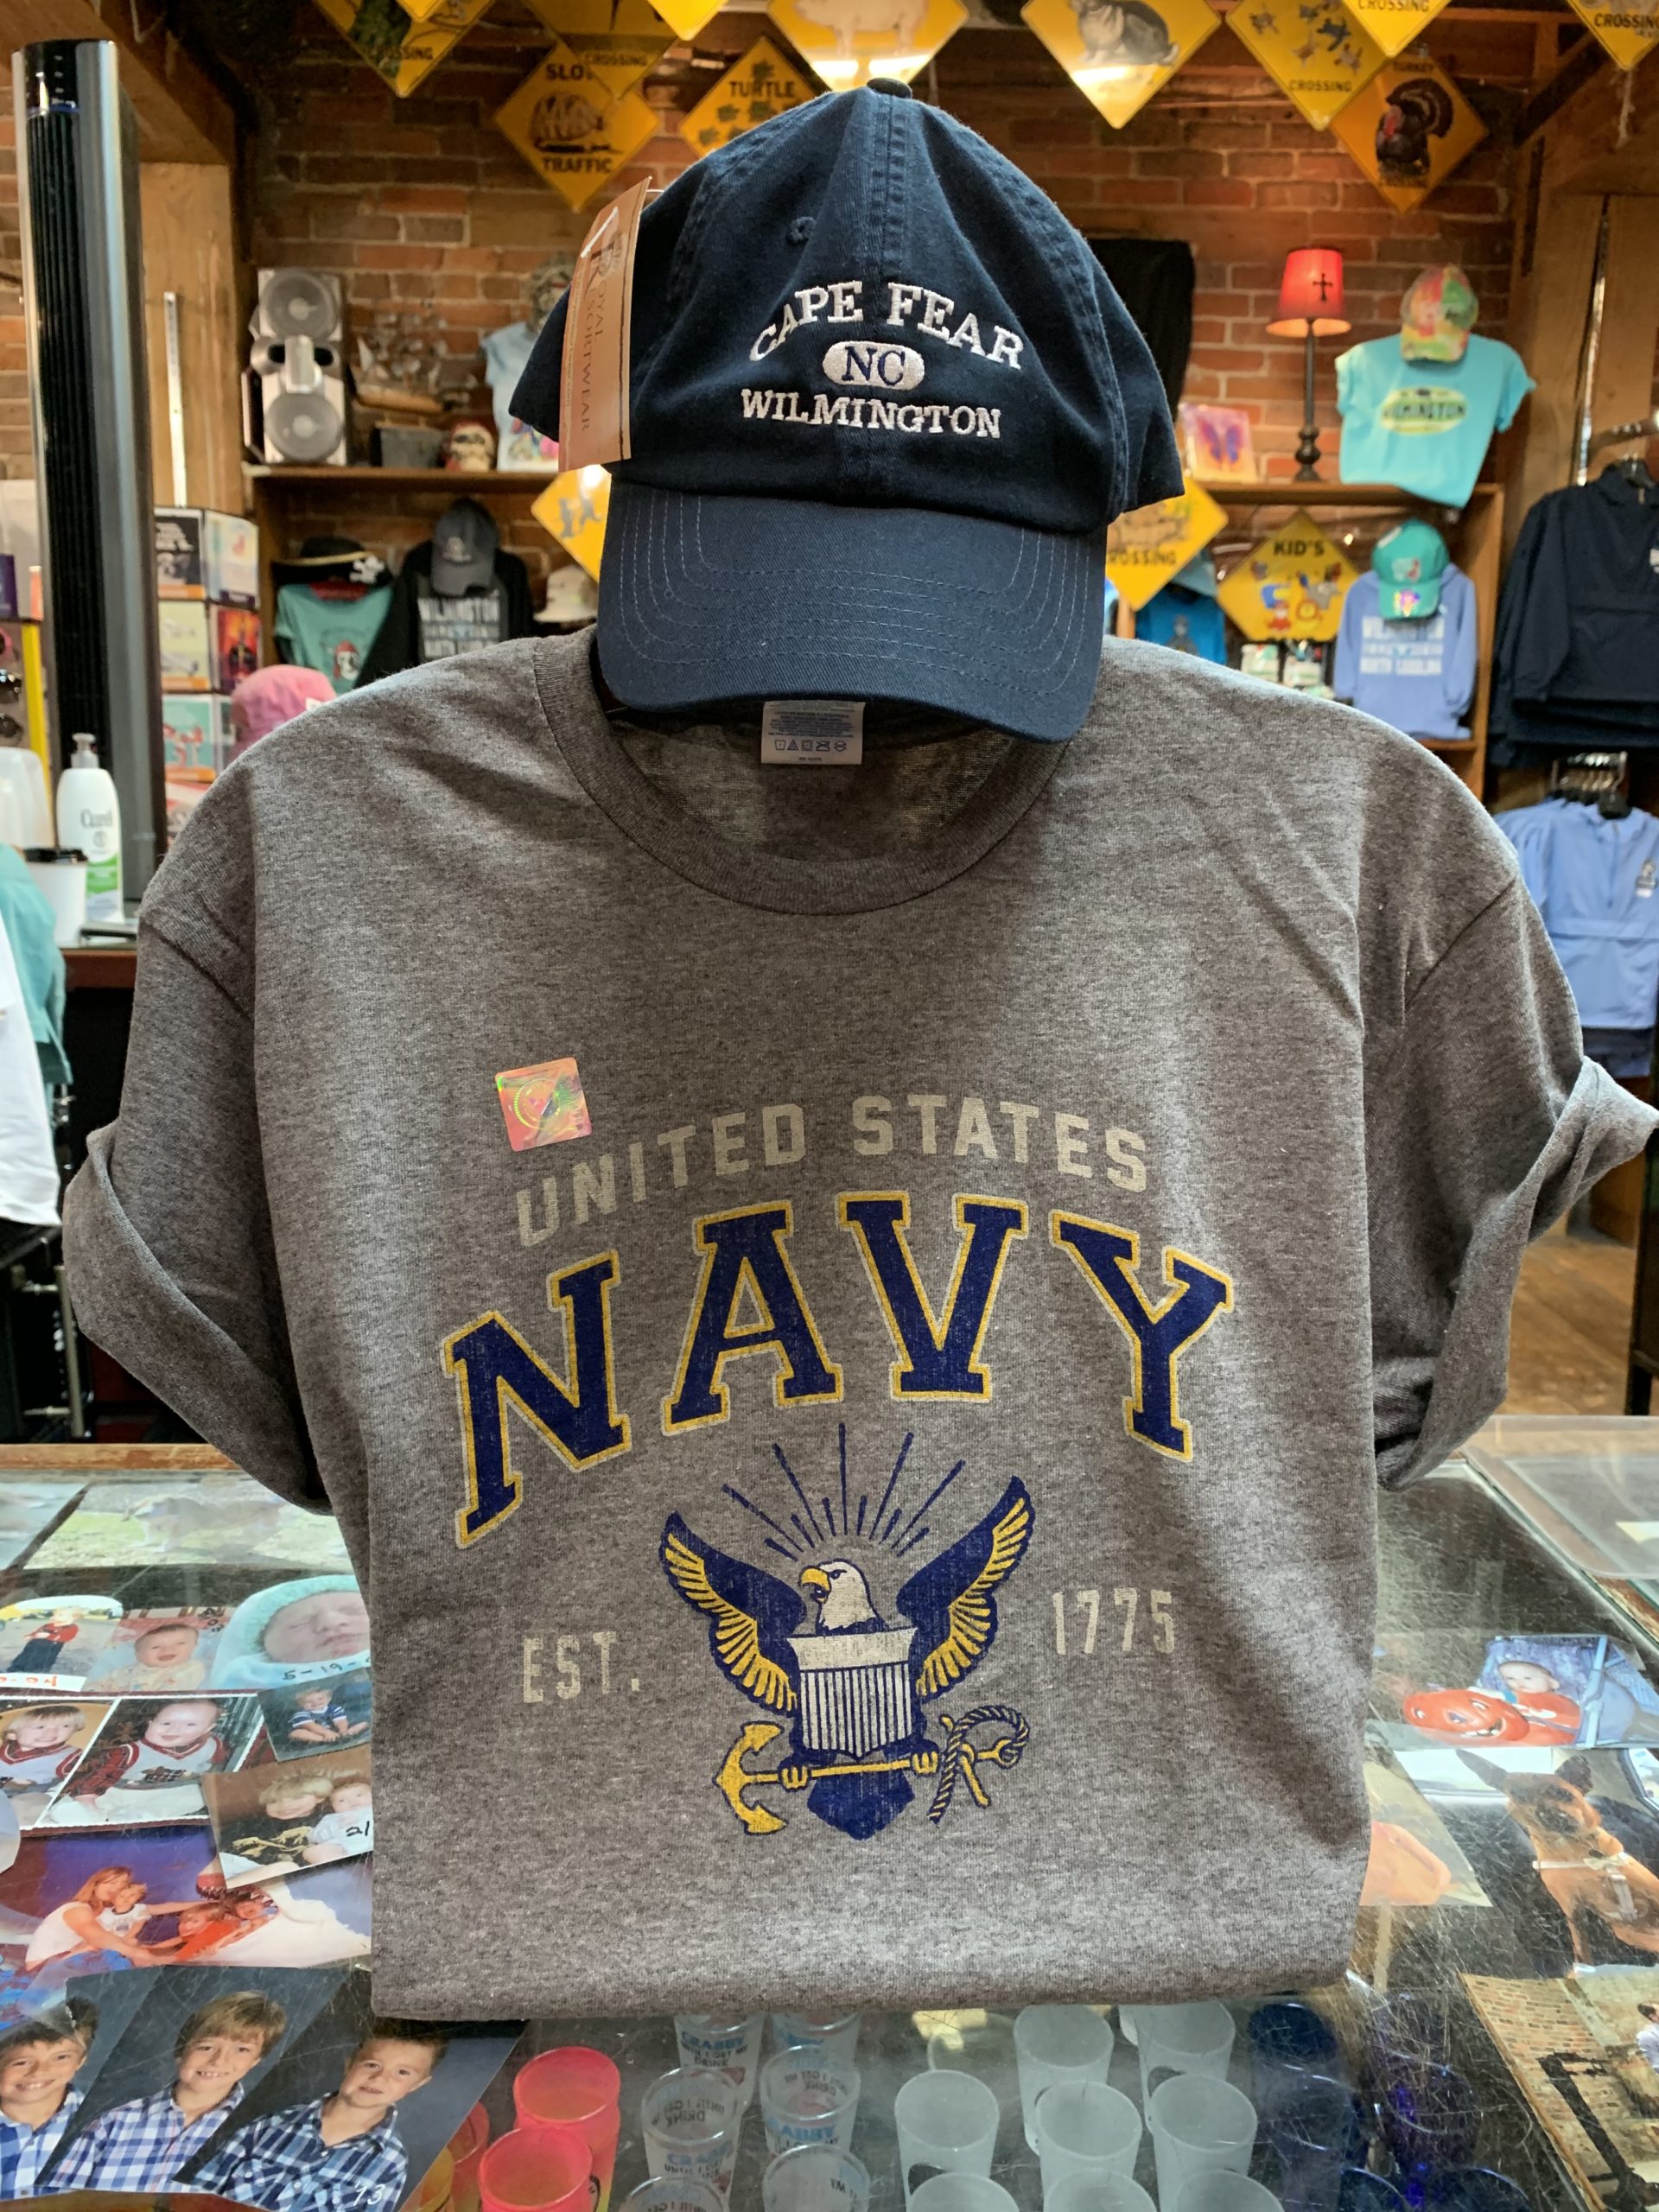 Official Navy Seal Shirts